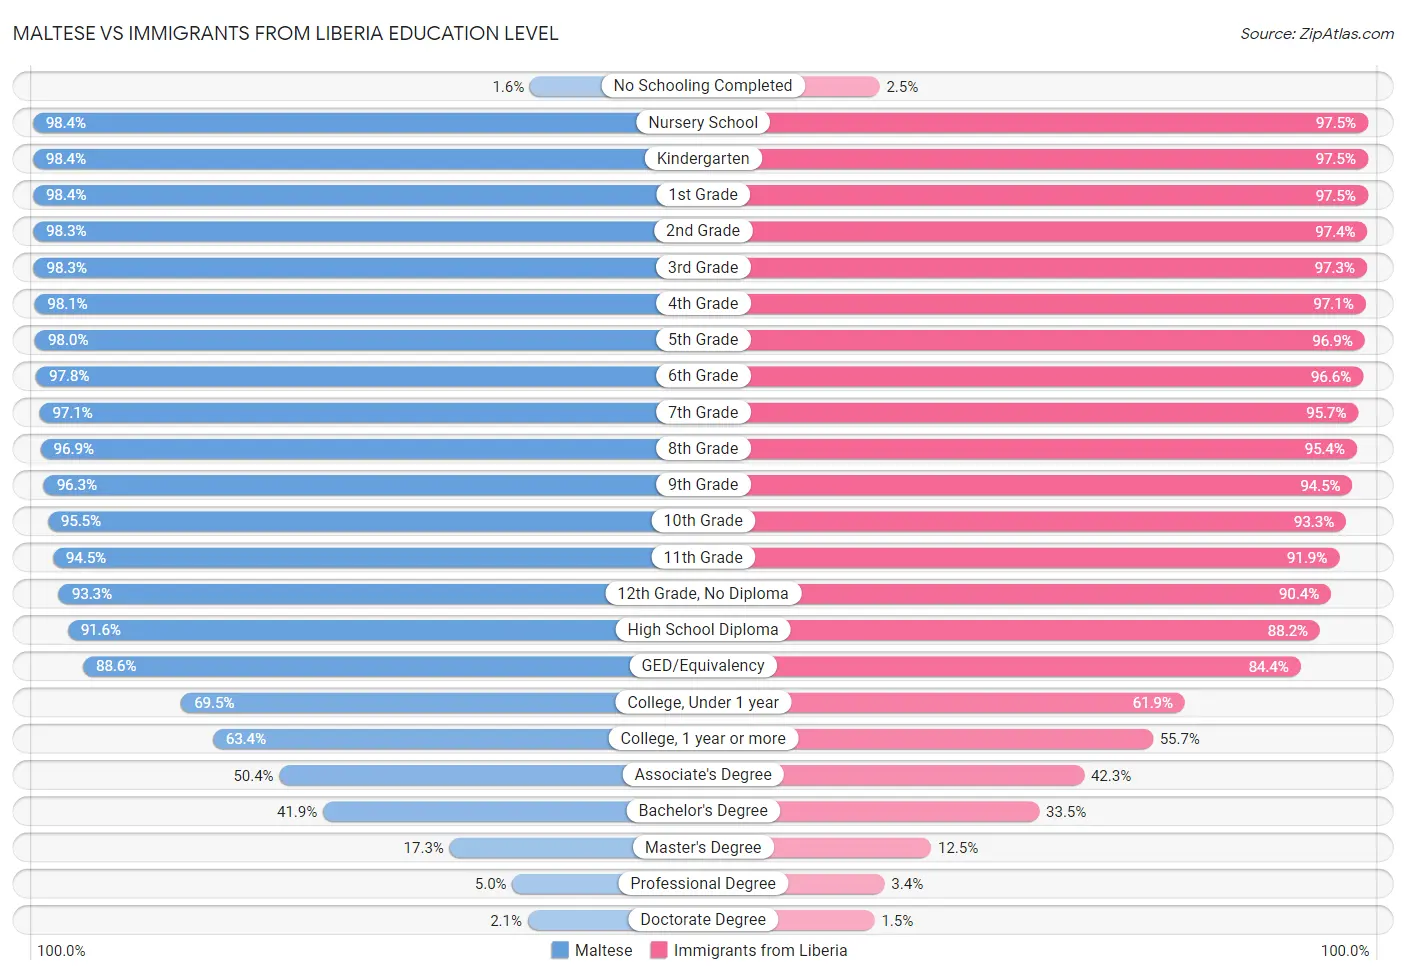 Maltese vs Immigrants from Liberia Education Level